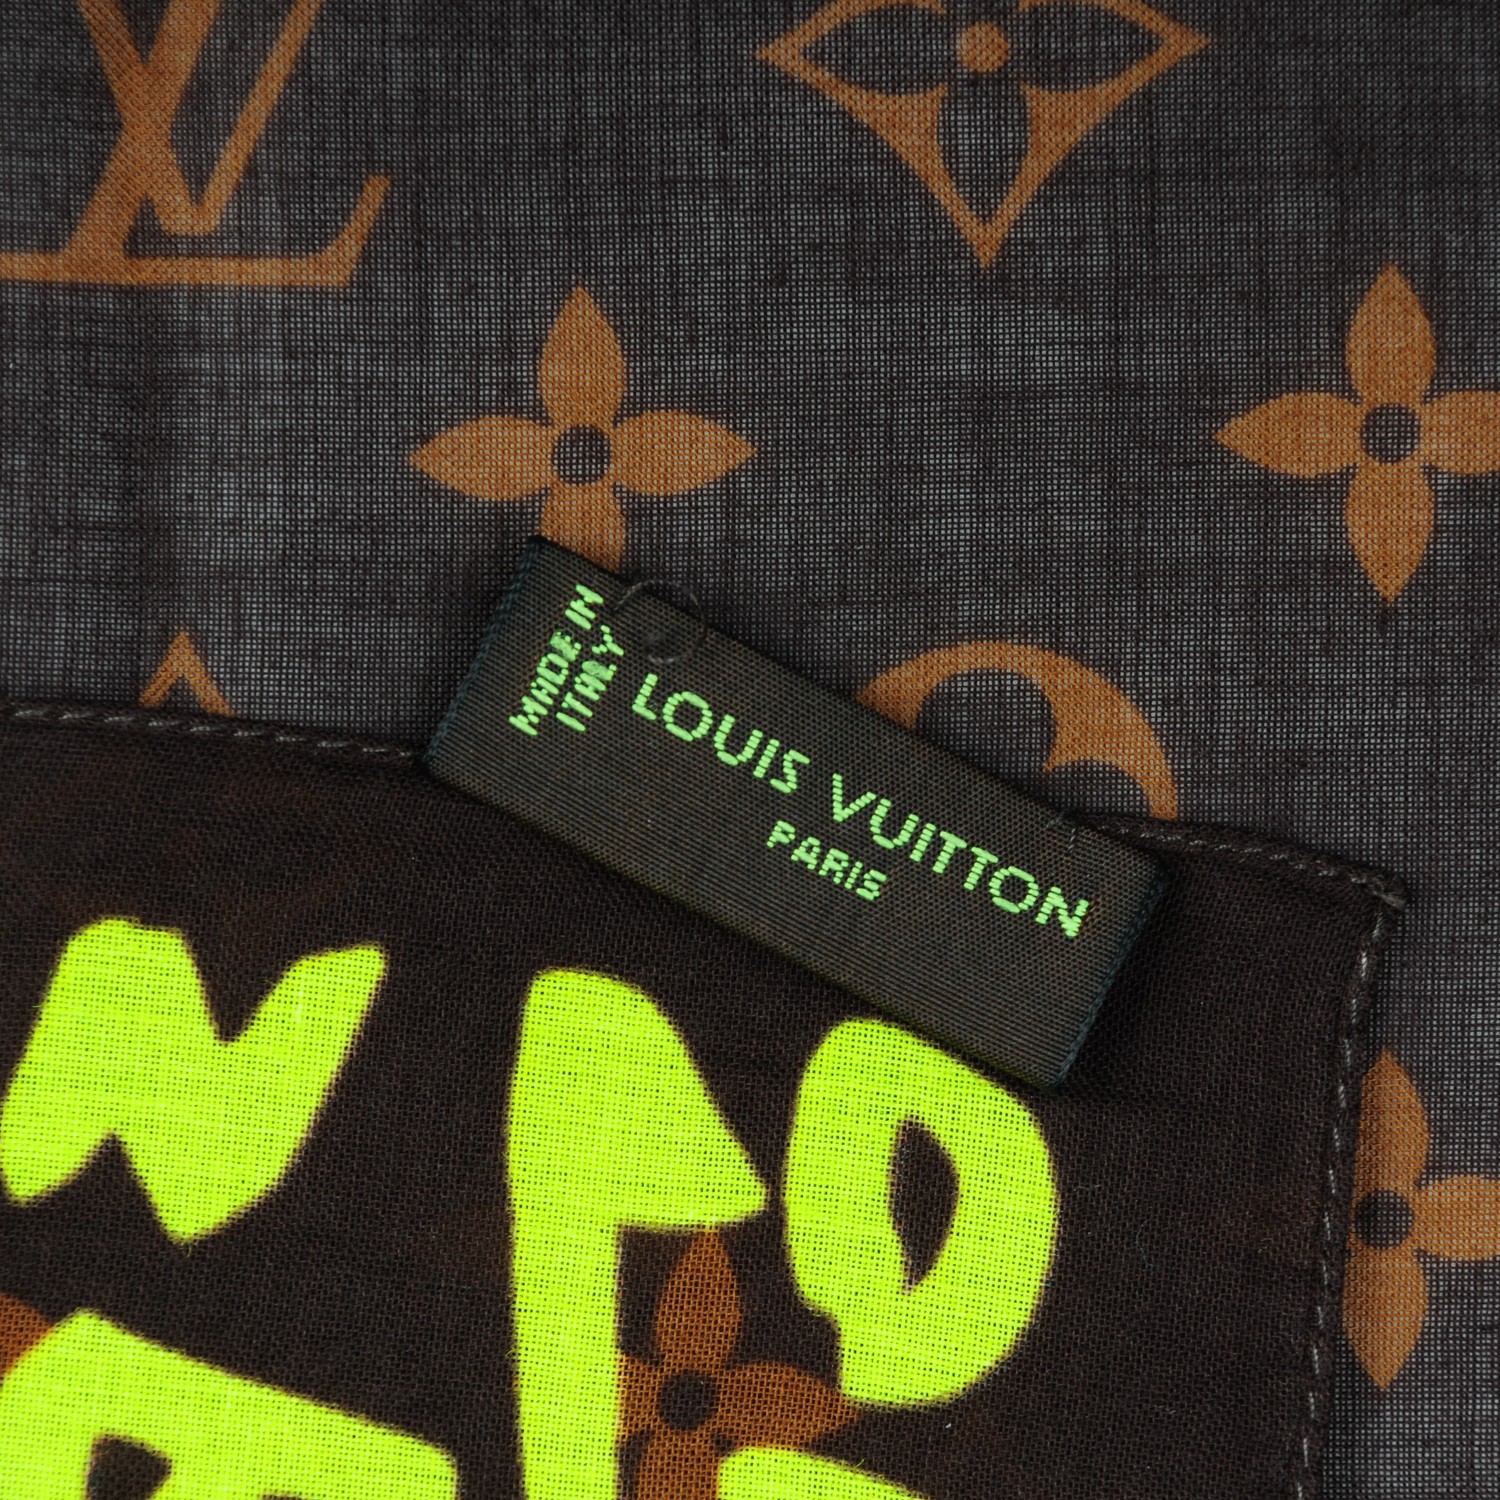 Louis Vuitton Graffiti  Natural Resource Department